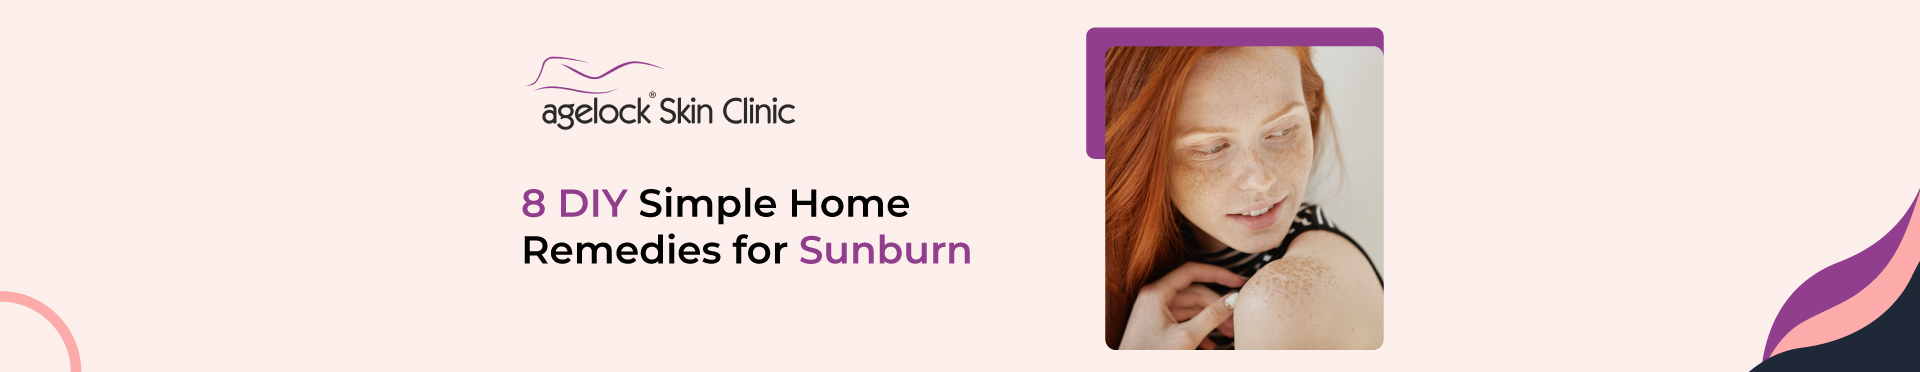 8 DIY Simple Home Remedies for Sunburn